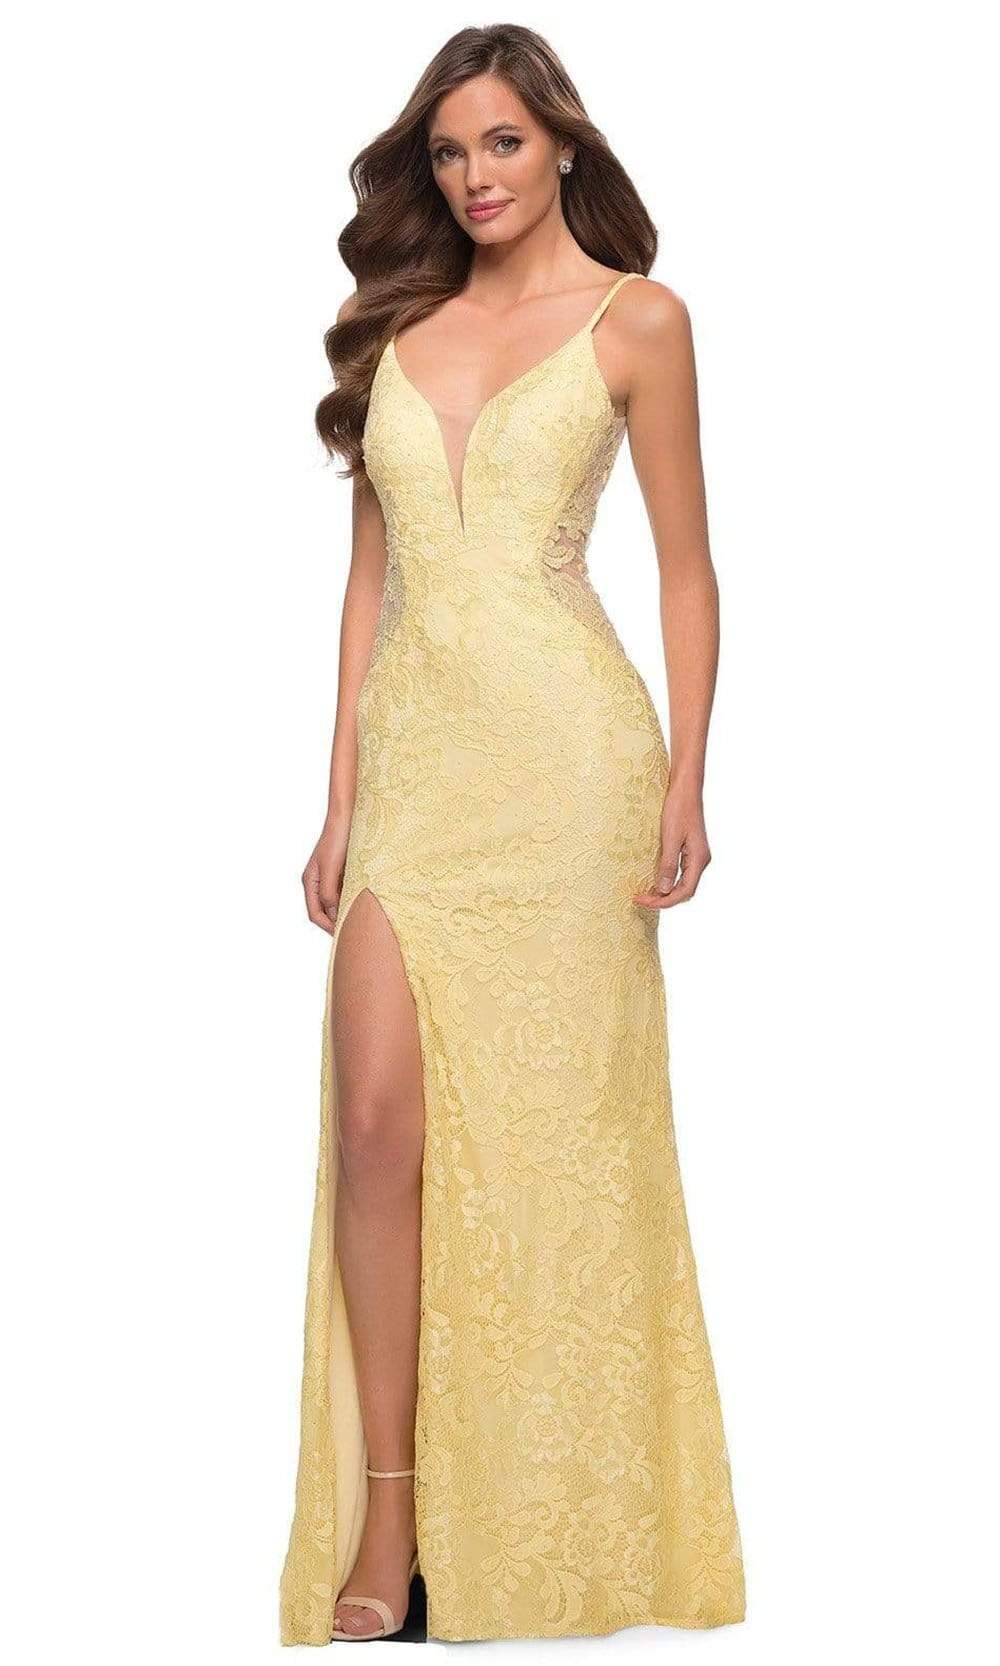 La Femme - 29679 Embellished Lace Deep V Neck Trumpet Dress Prom Dresses 00 / Pale Yellow